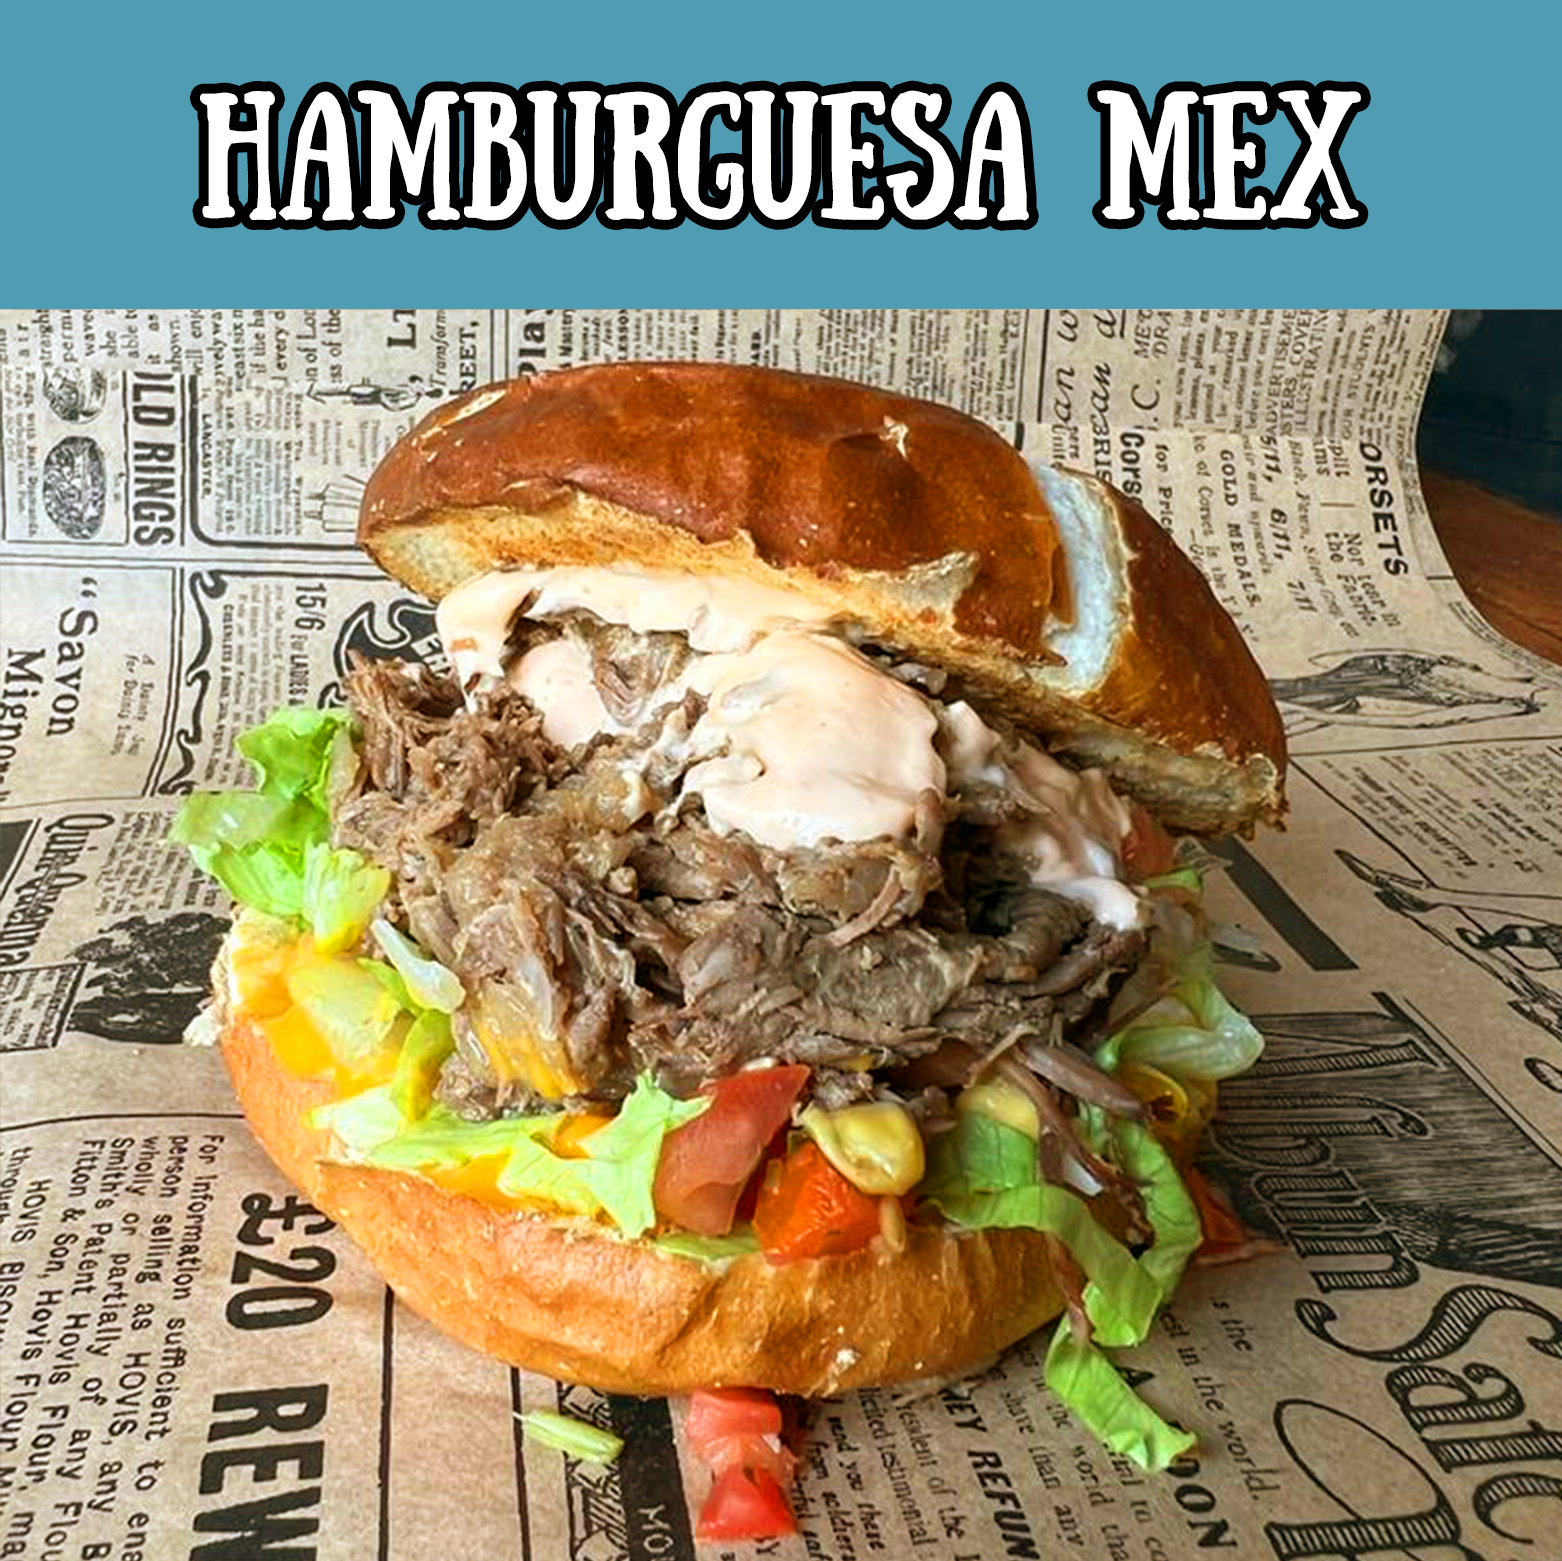 Hamburguesa Mex